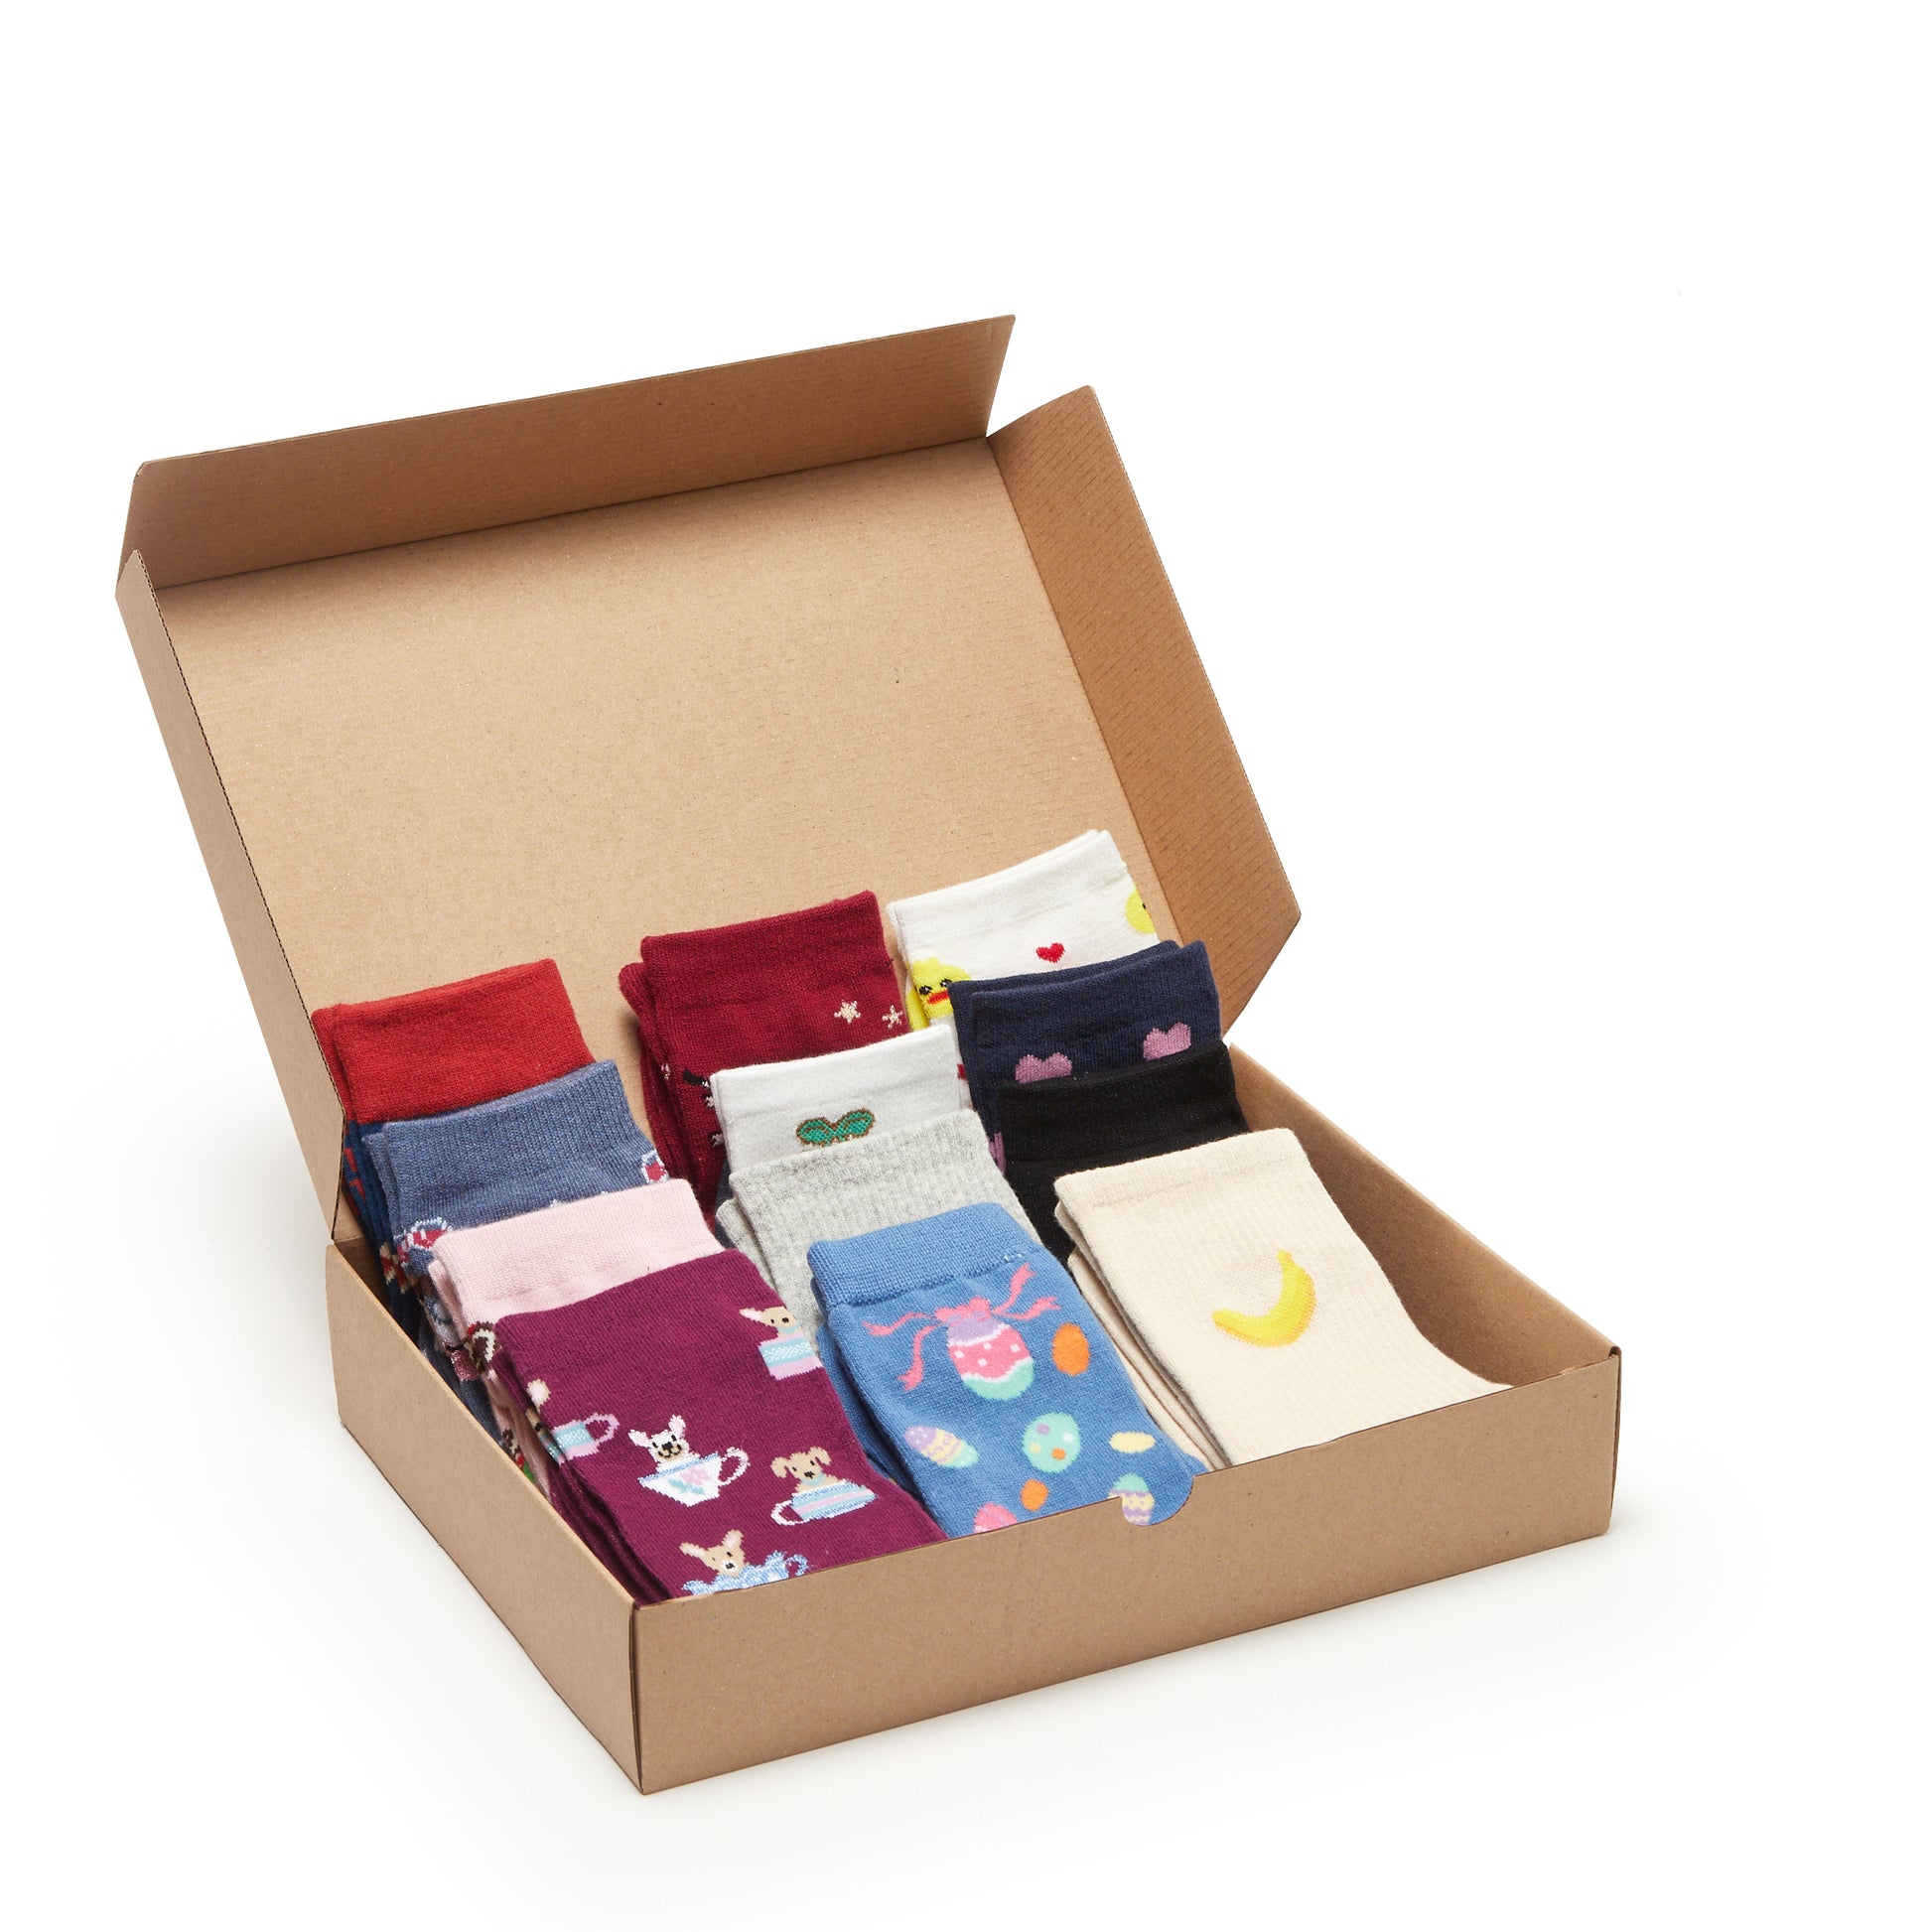 Mystery Box of Socks Gift Set - 10 Pairs - IDENTITY Apparel Shop